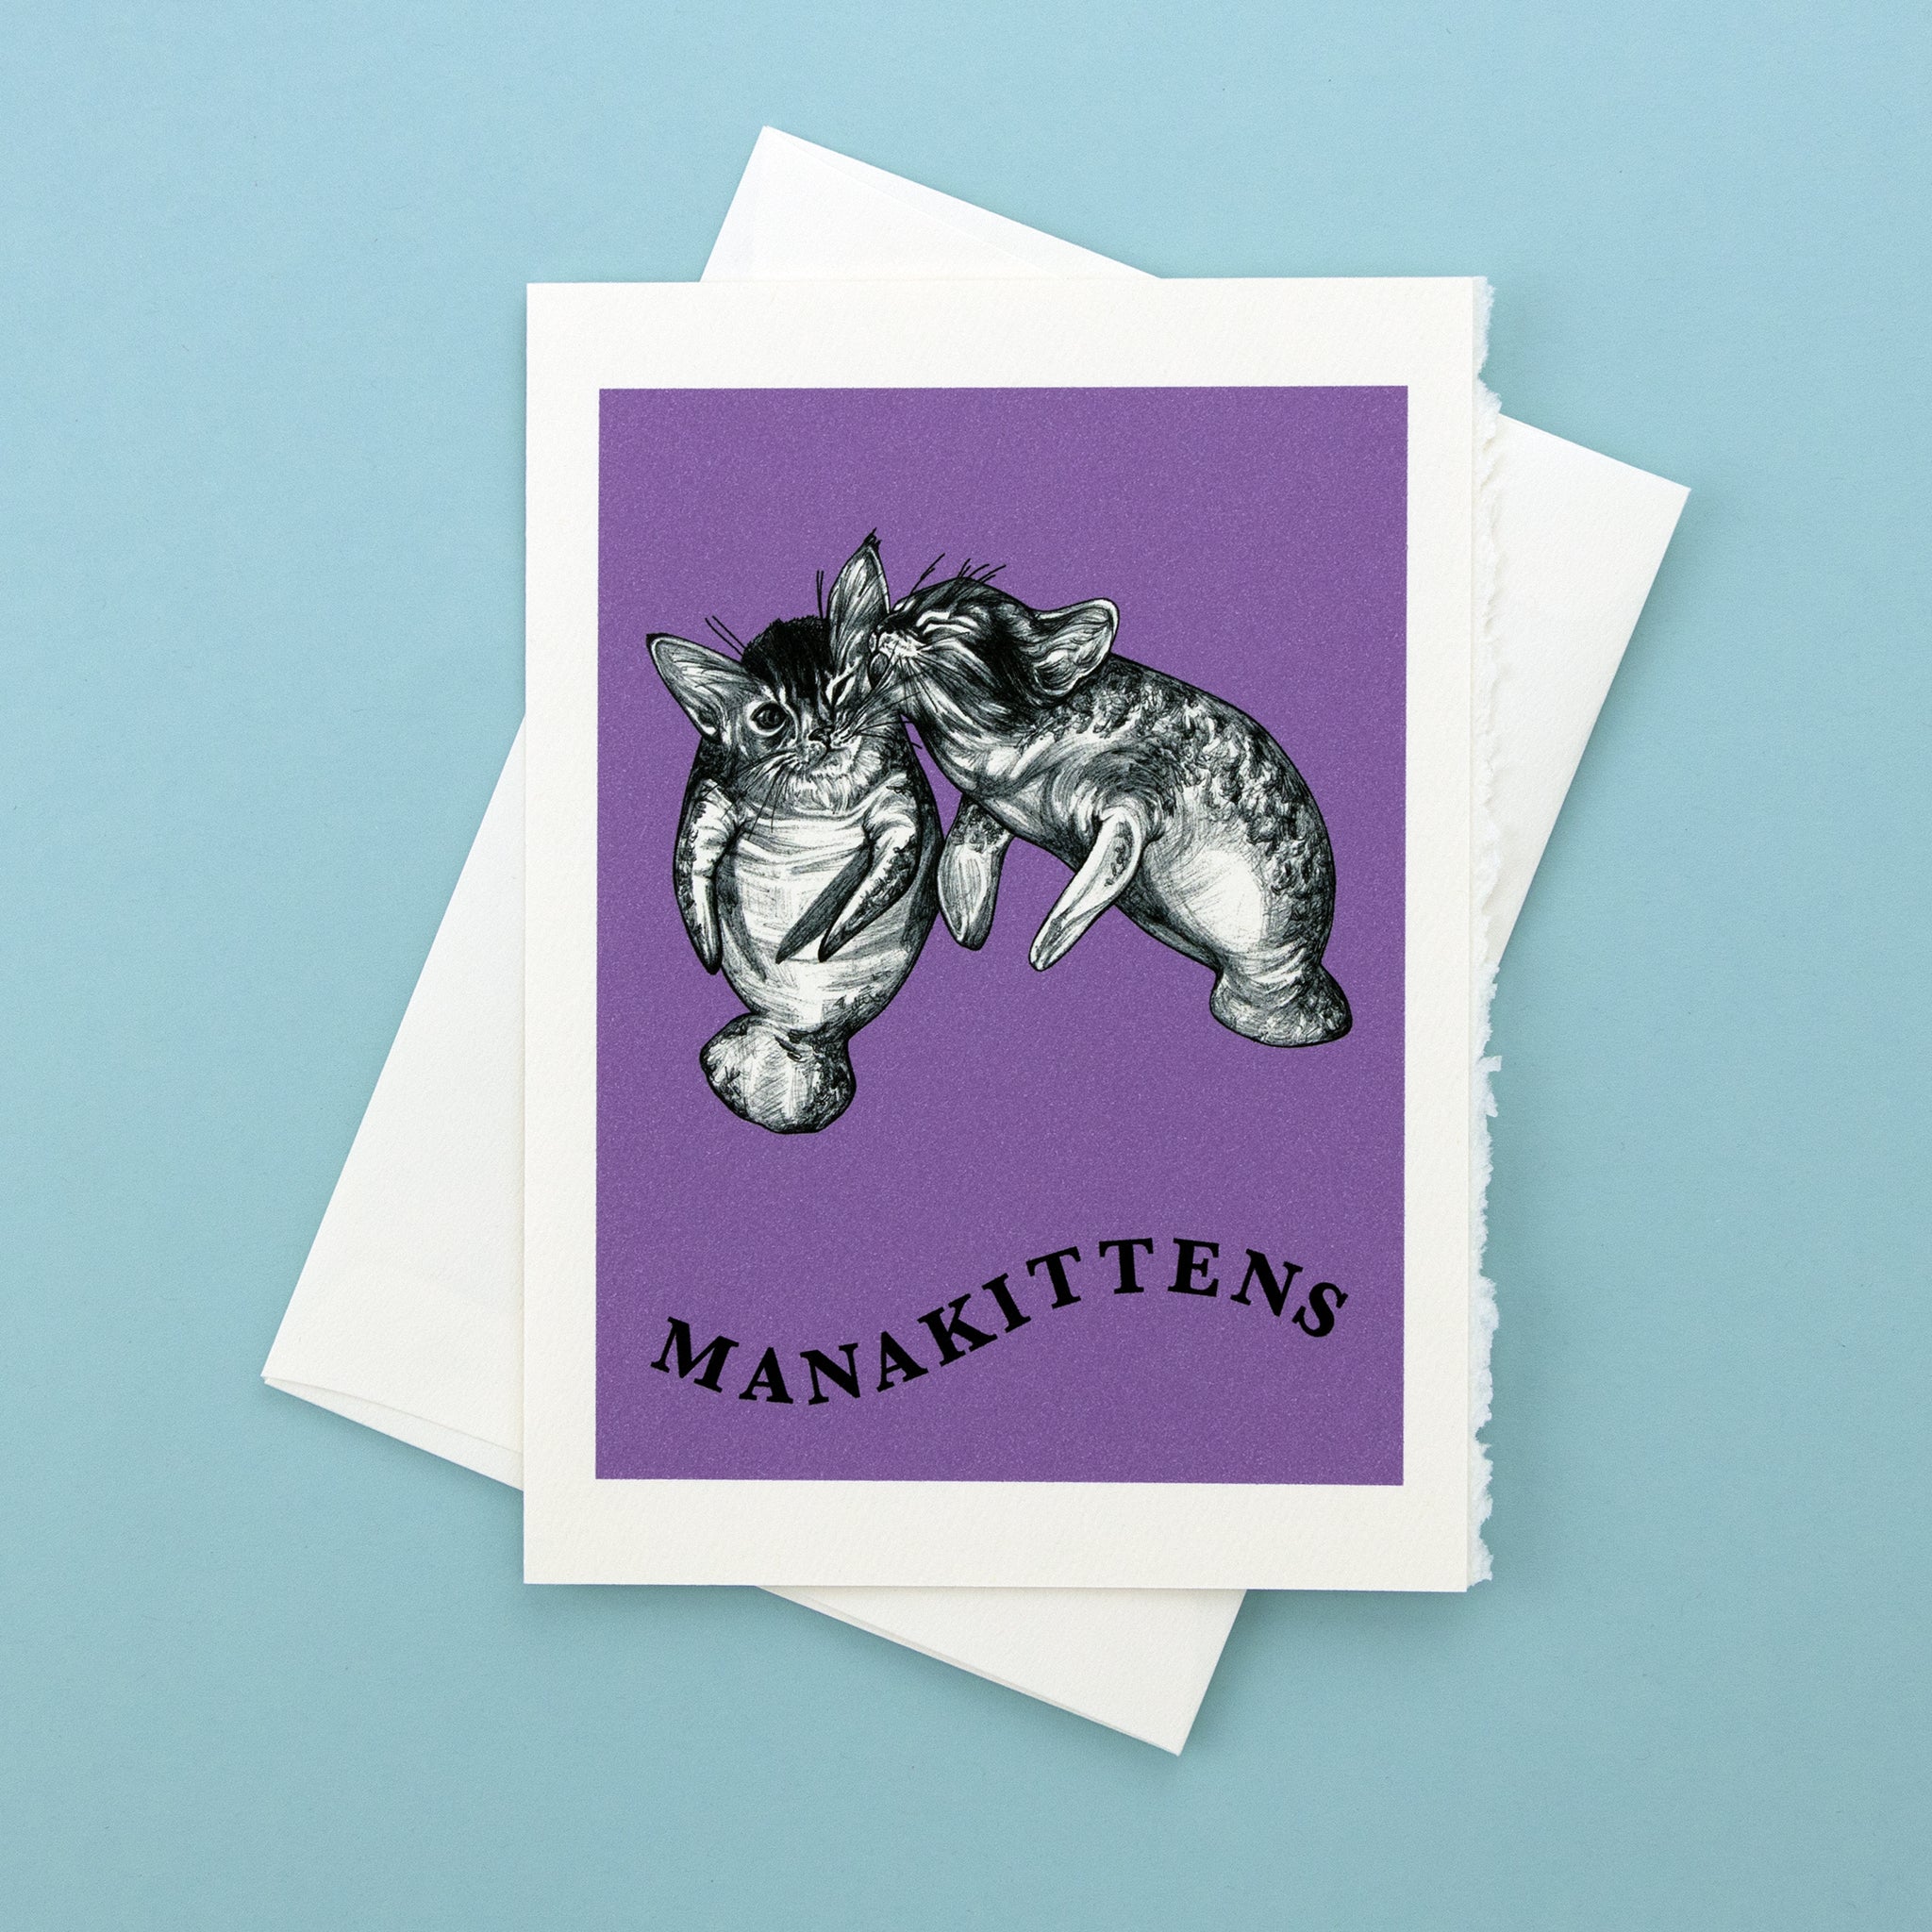 Manakittens | Manatee + Kitten Hybrid Animal | 5x7" Greeting Card